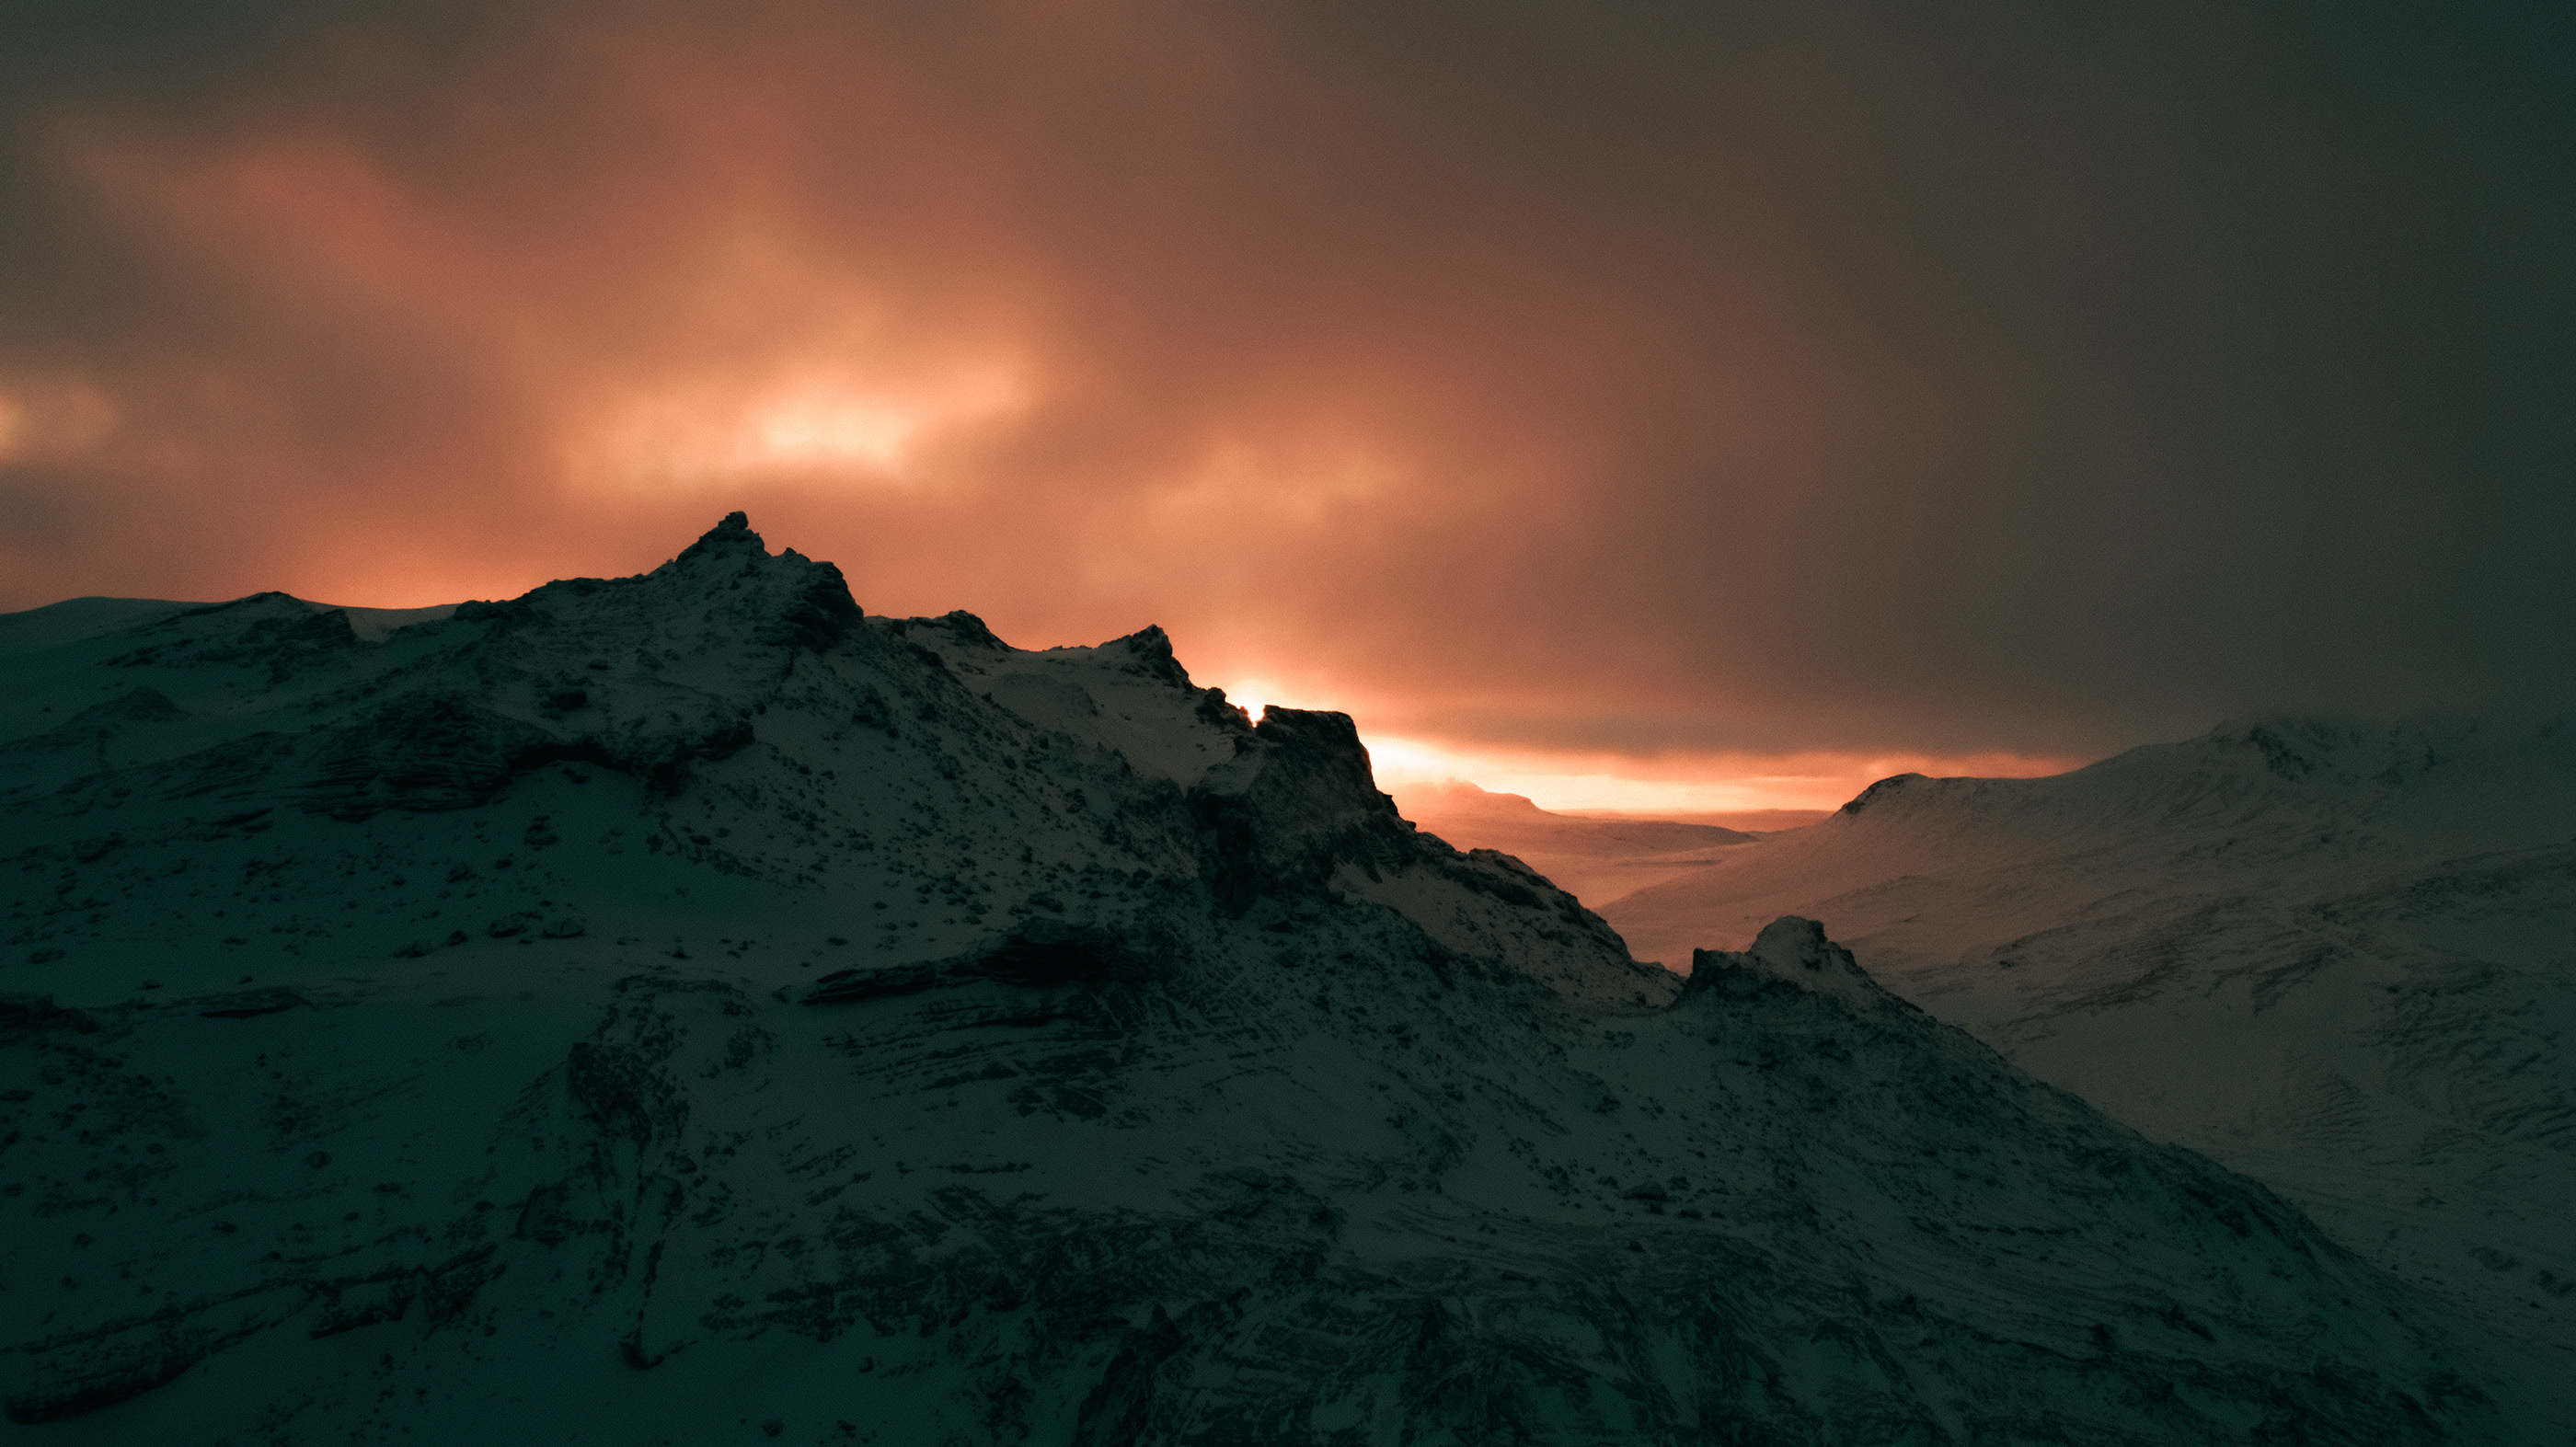 General 2800x1573 Arctic ice landscape mountains nature snow sunrise sunset winter clouds sky